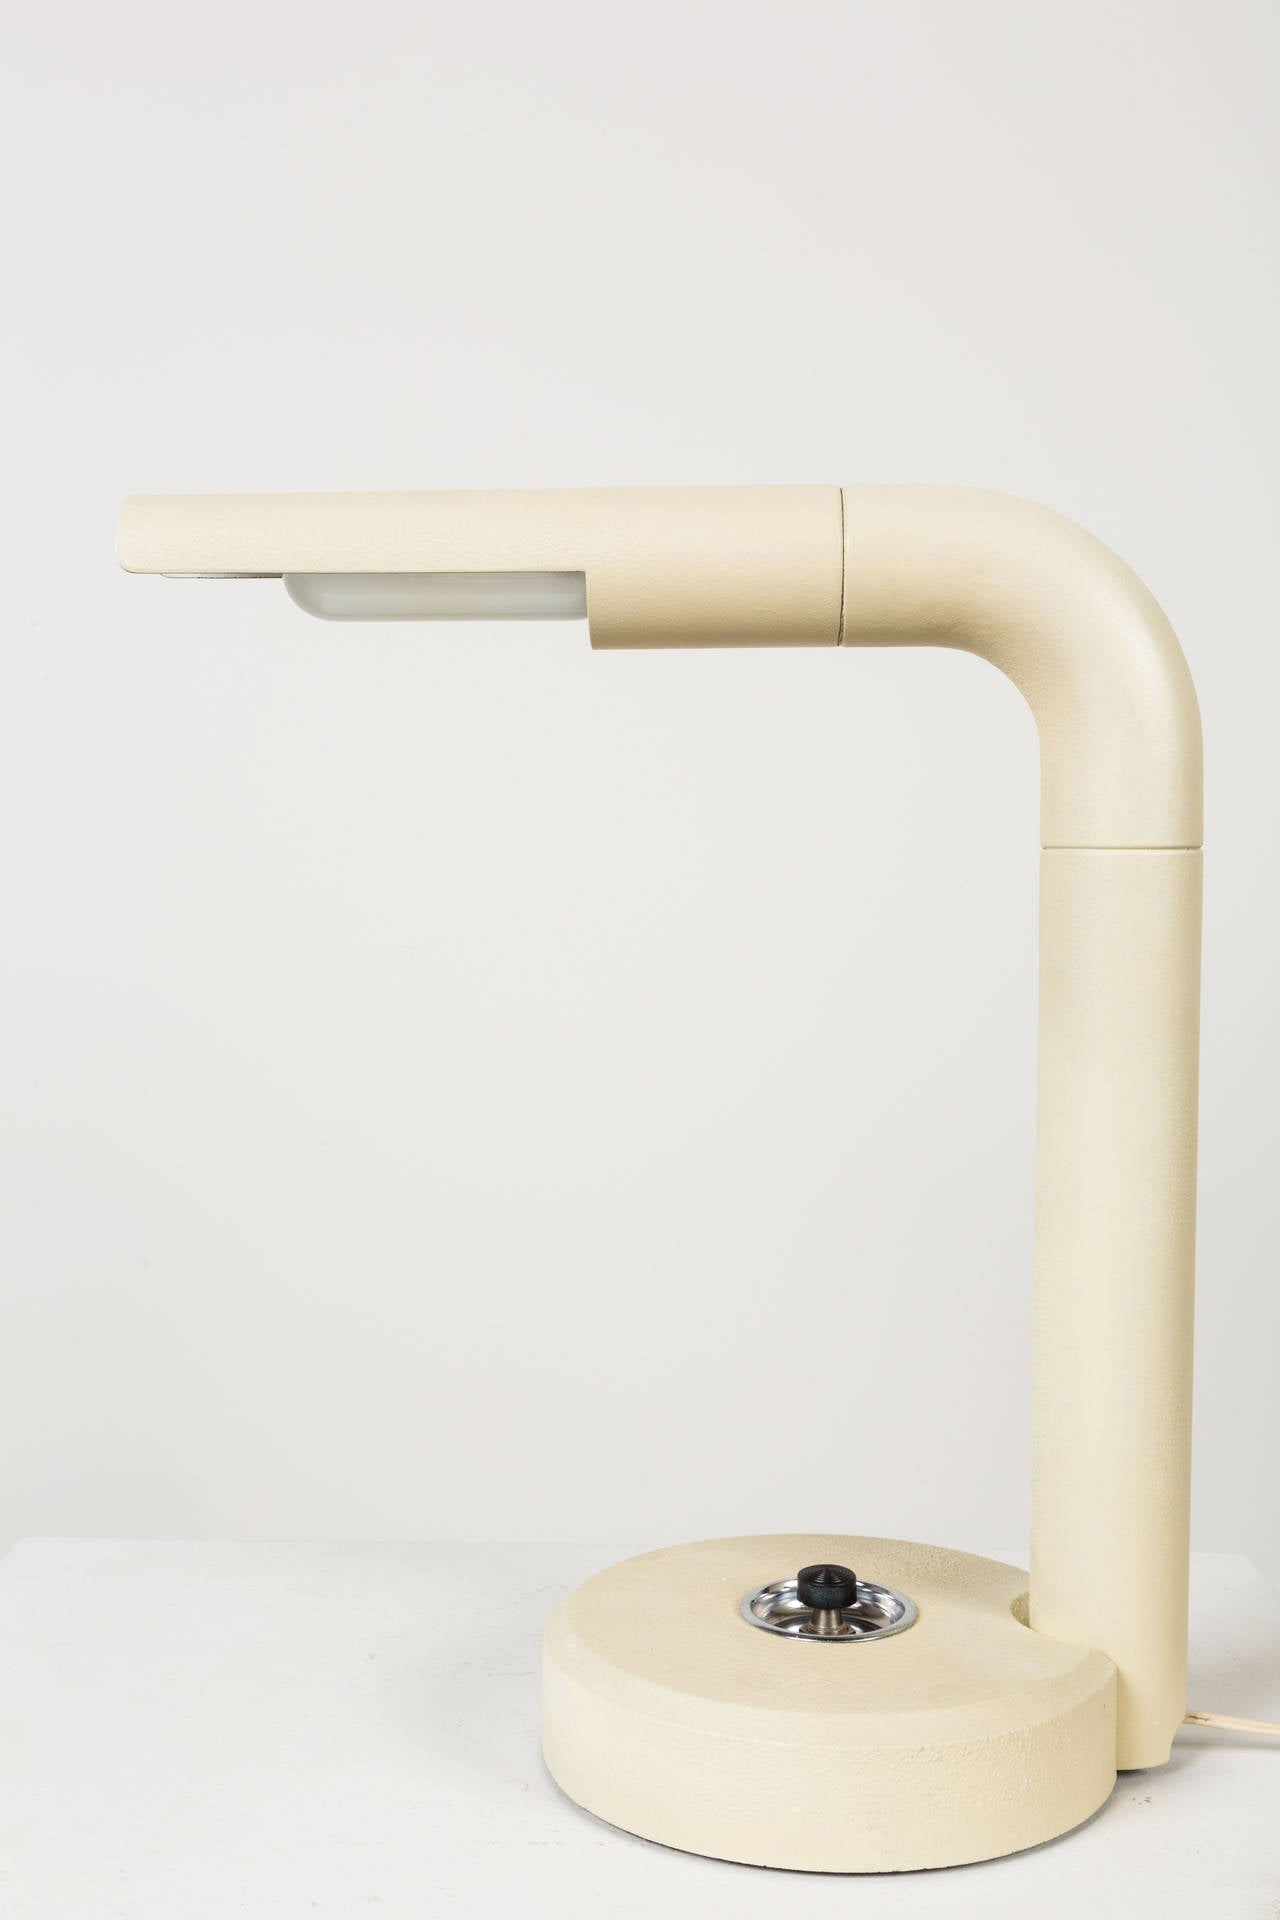 Gino Sarfatti Table Lamp for Arteluce 1